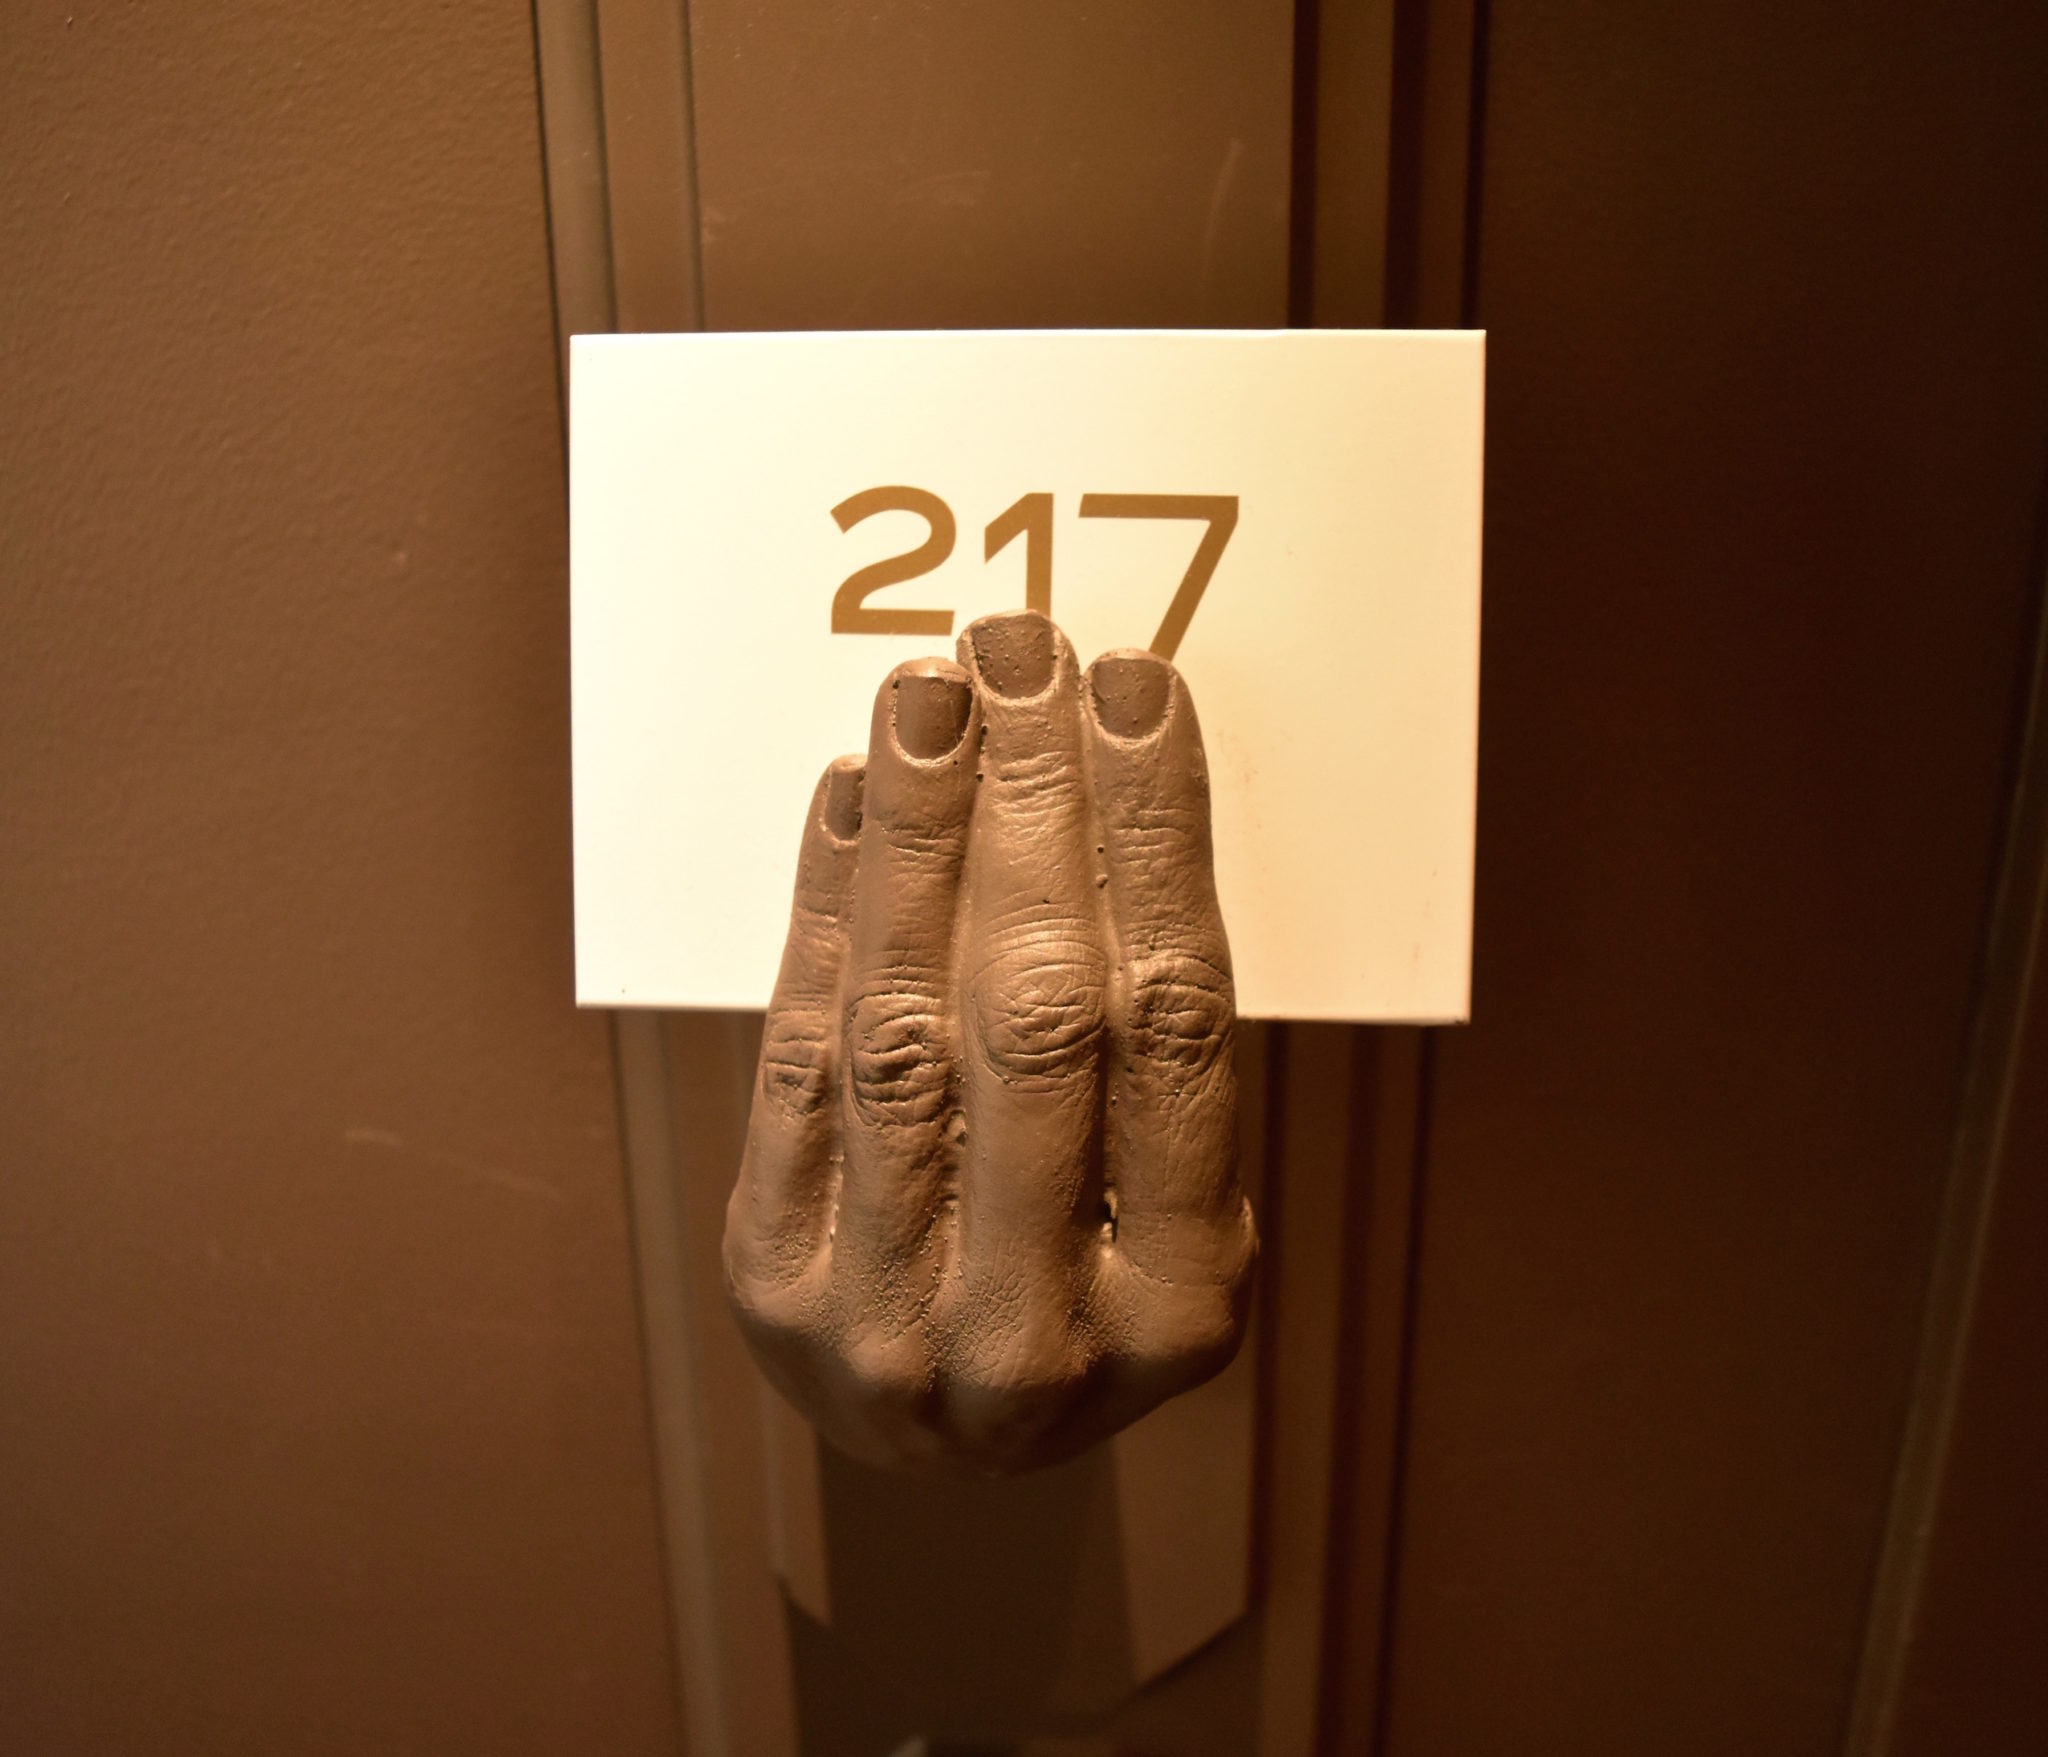 A hand sculpture holding a door number